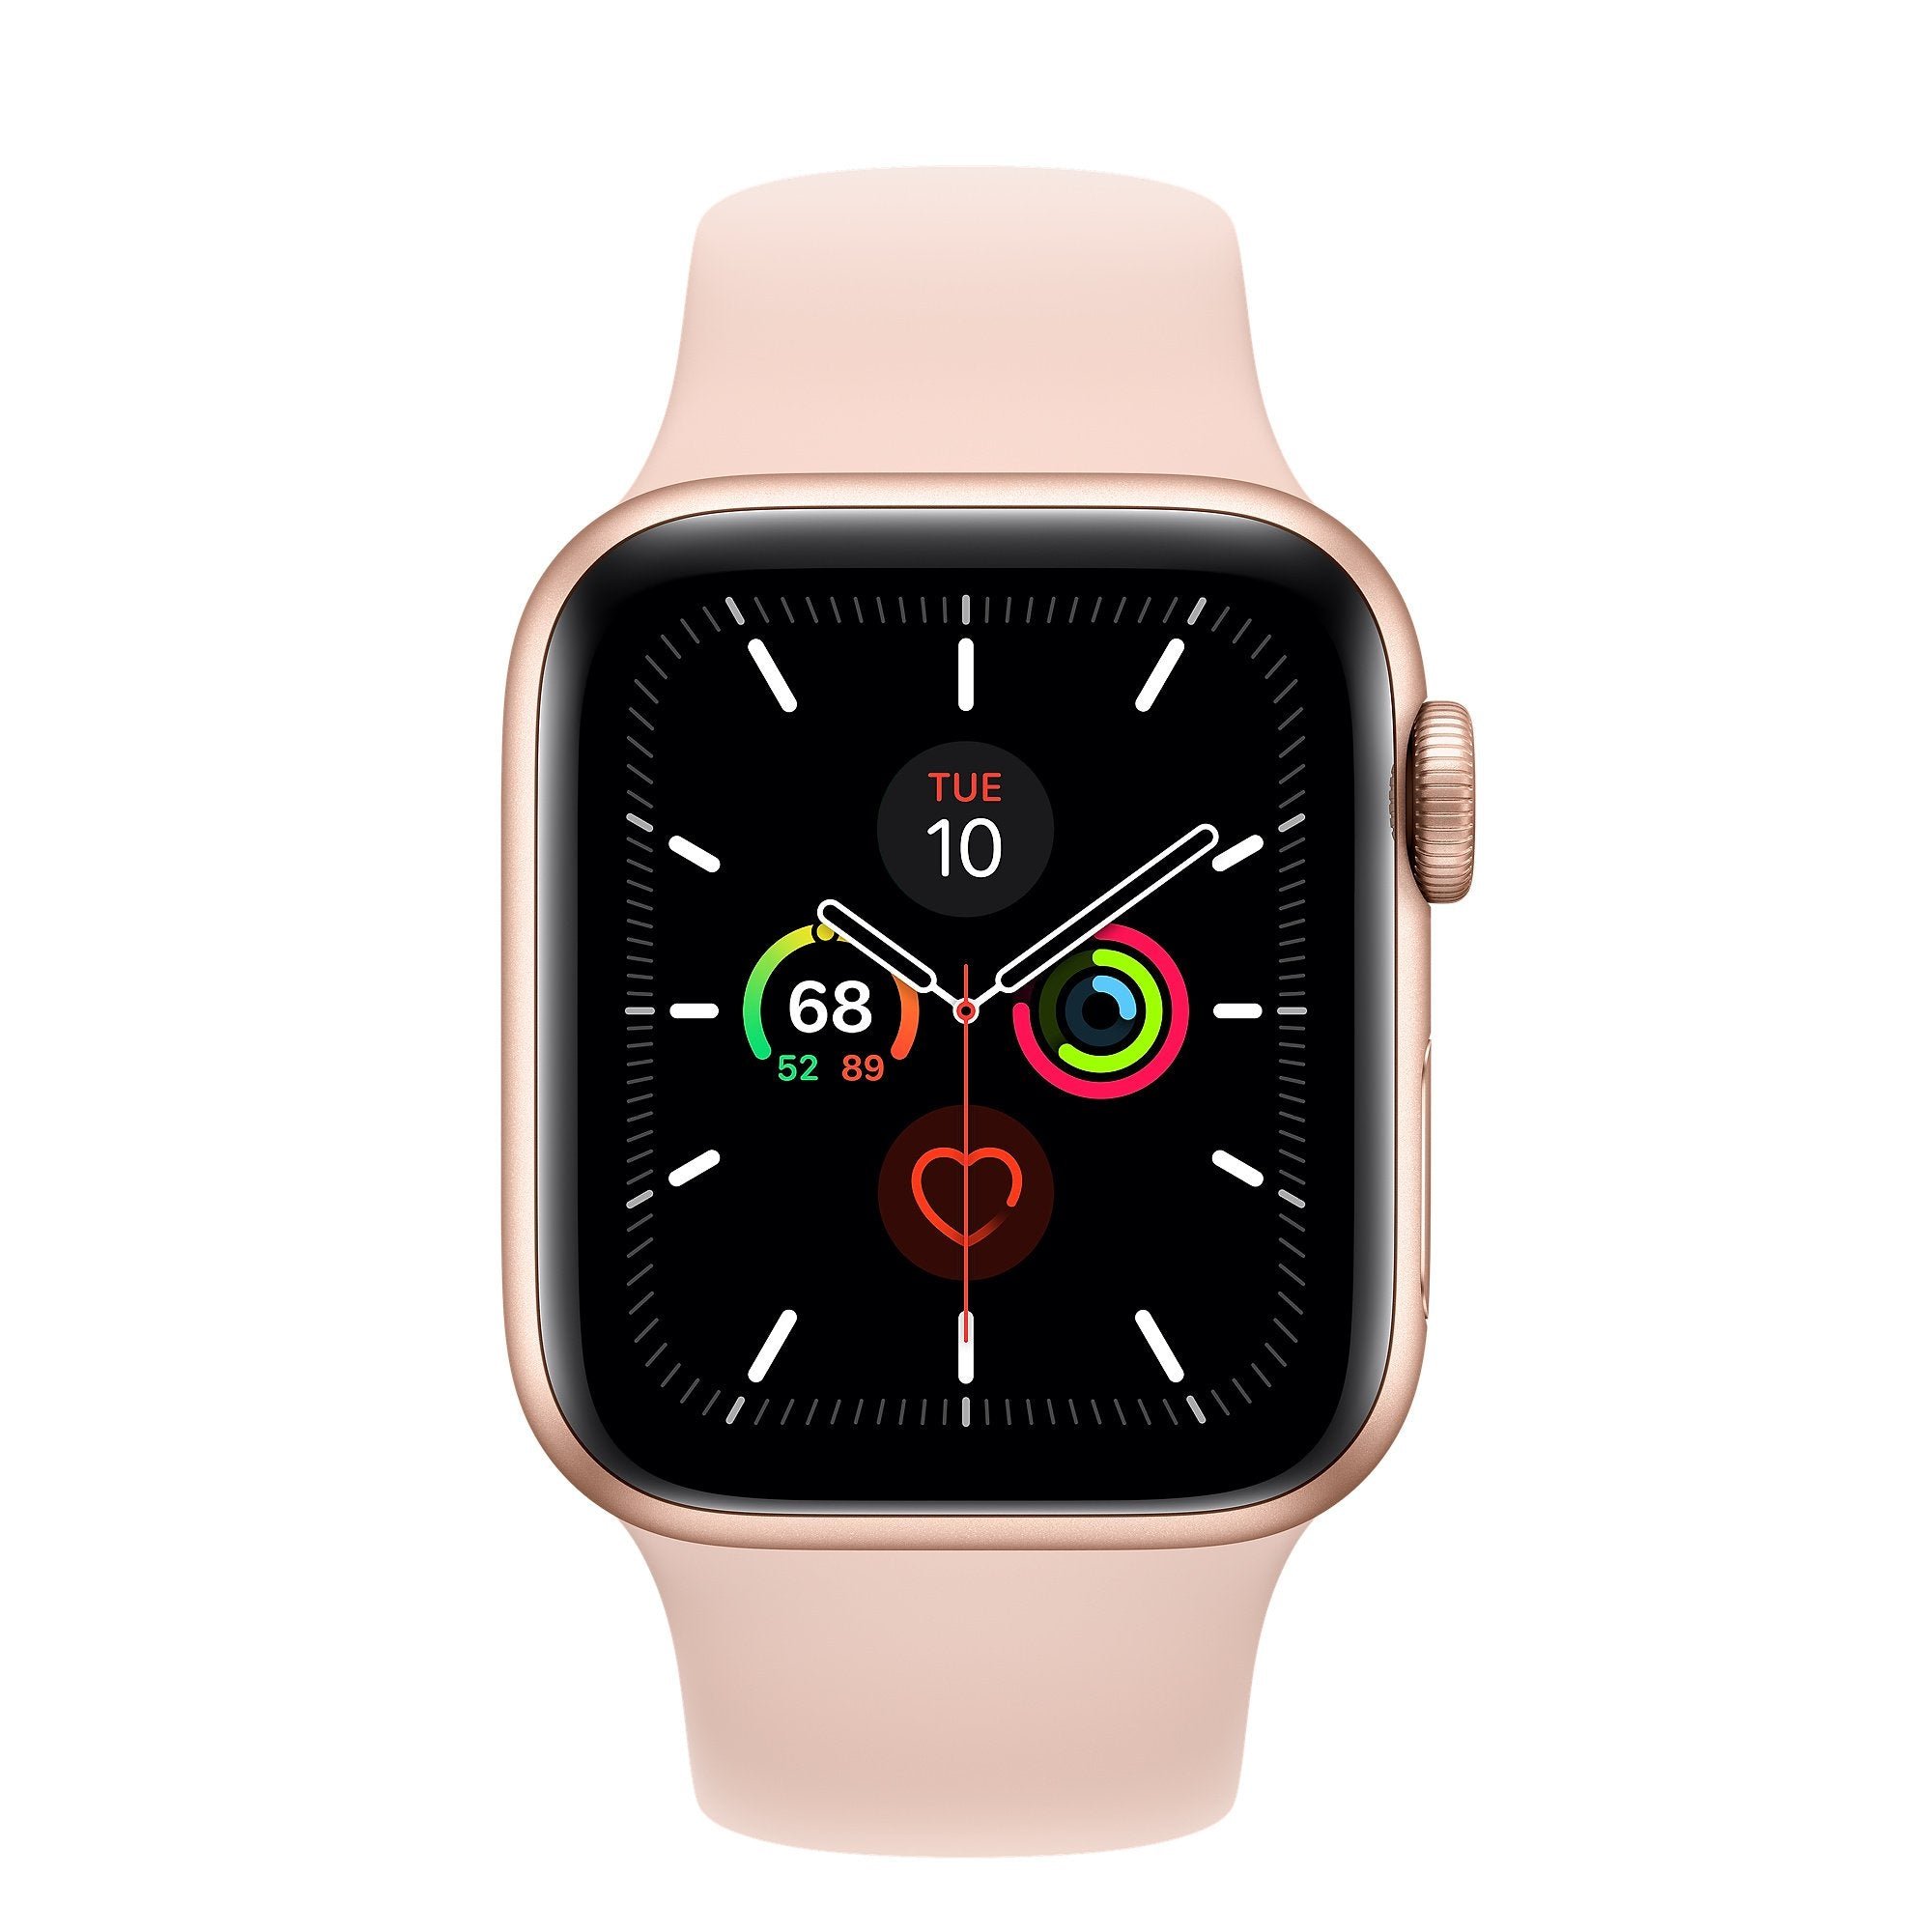 Apple Watch Series 4 44MM Gold (GPS Cellular)